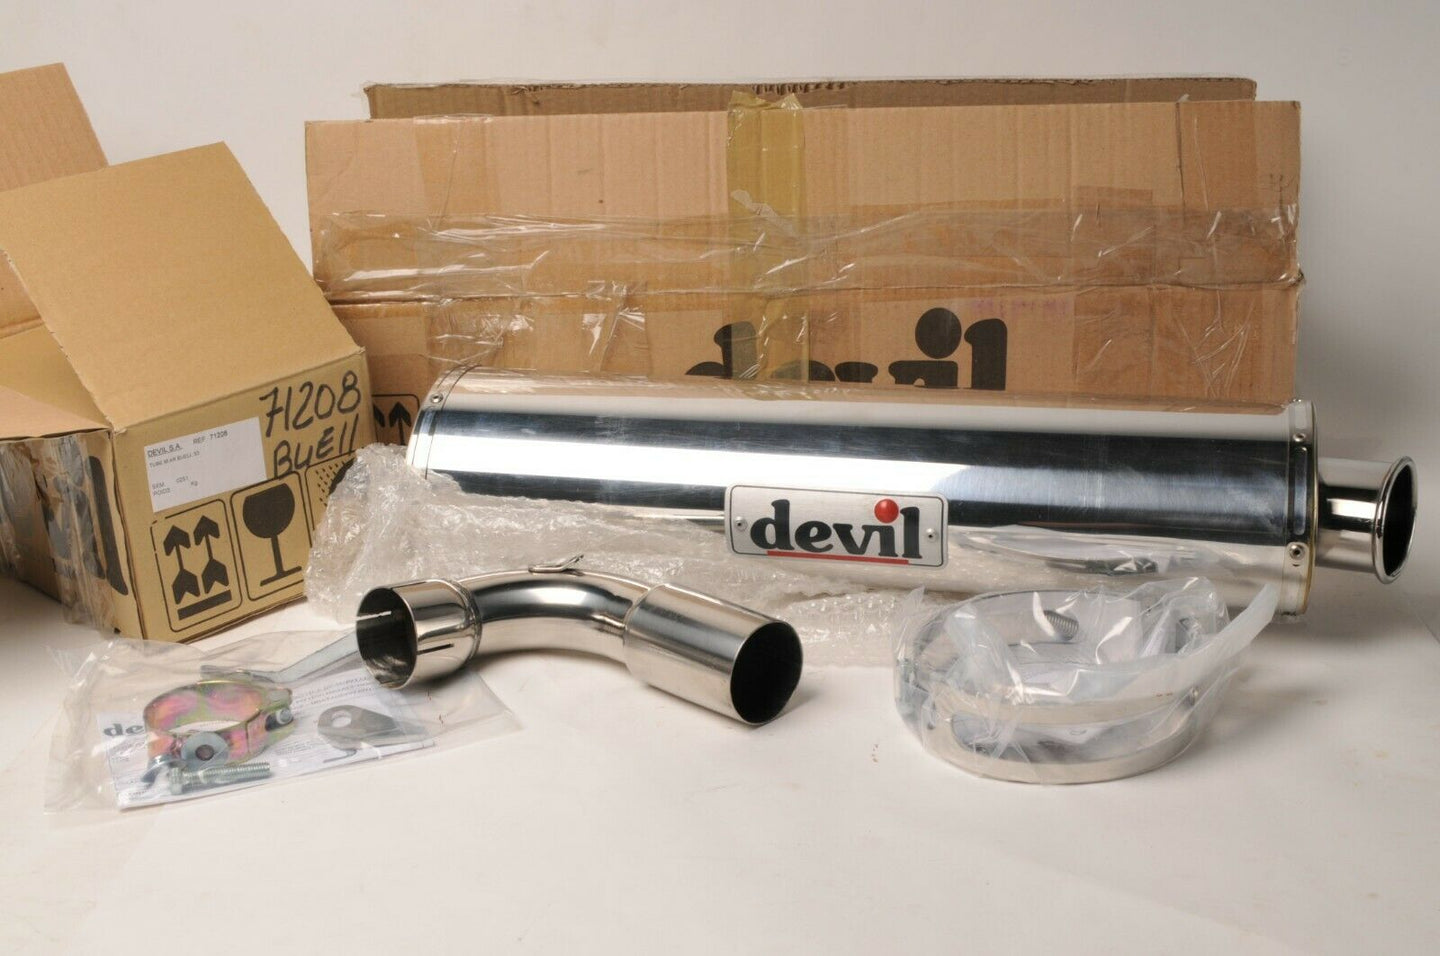 DISPLAY Devil Exhaust Muffler Silencer - Buell S3 1200 - 71208 + 53499 Trophy